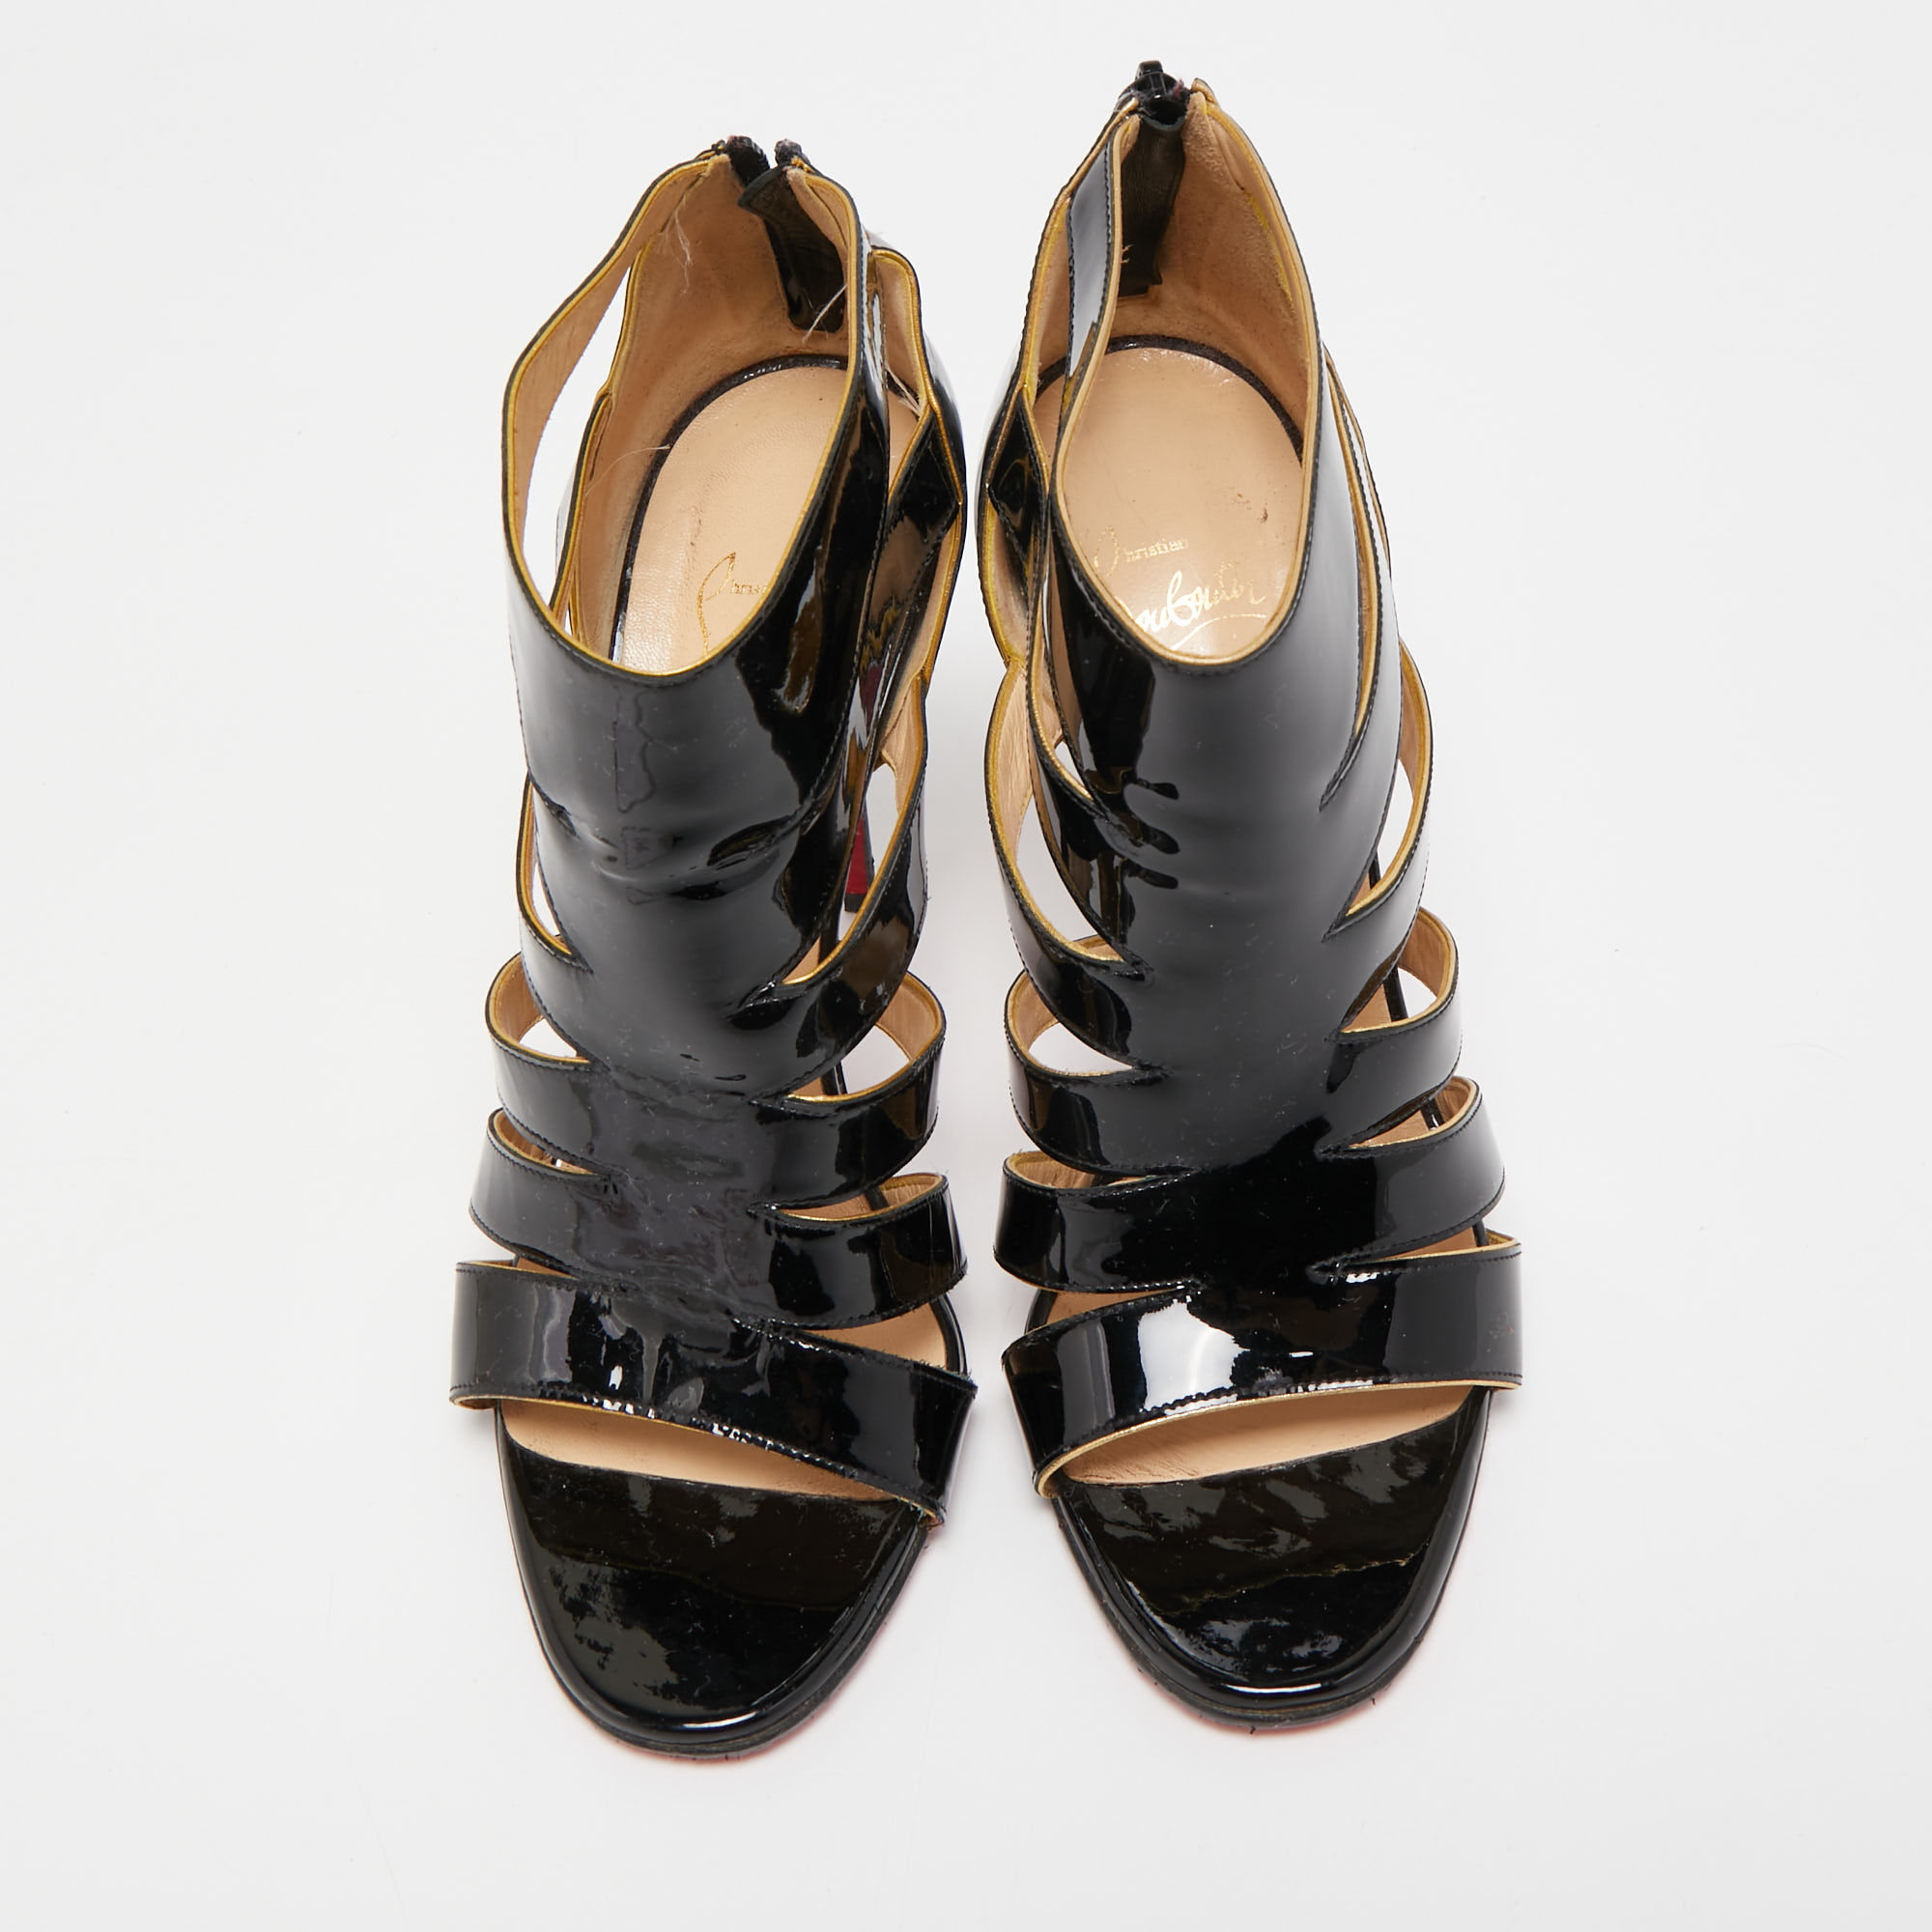 Christian Louboutin Black/Gold Patent Leather Beauty K Sandals Size 40